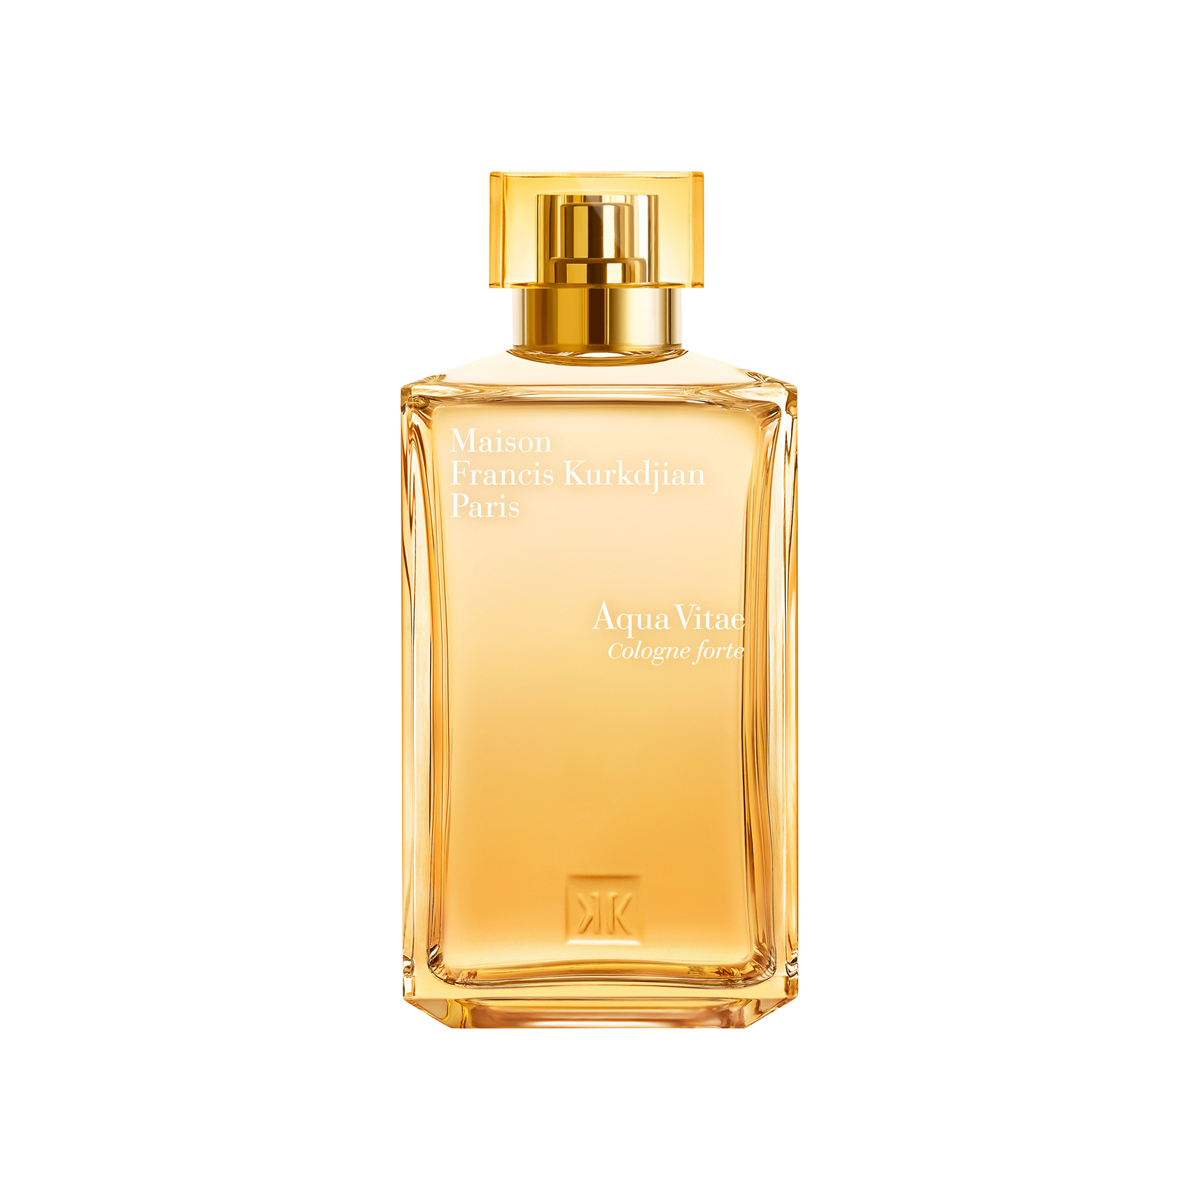 Maison Francis Kurkdjian - Aqua Vitae Cologne Forte Eau de Parfum